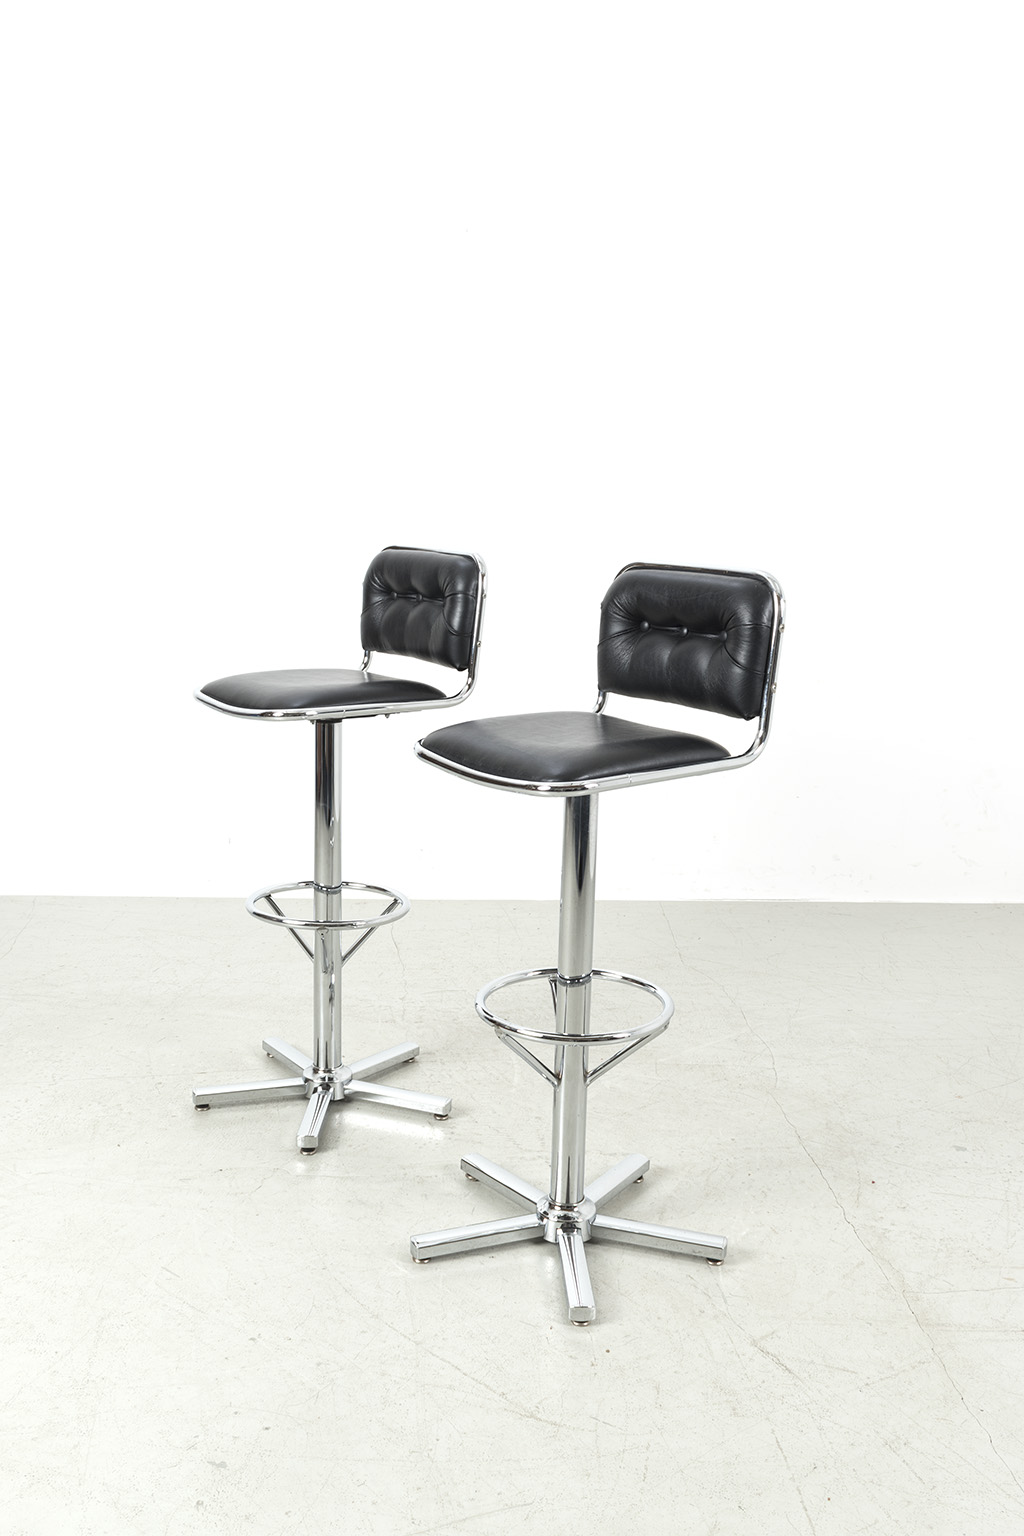 Pair of chrome bar stools